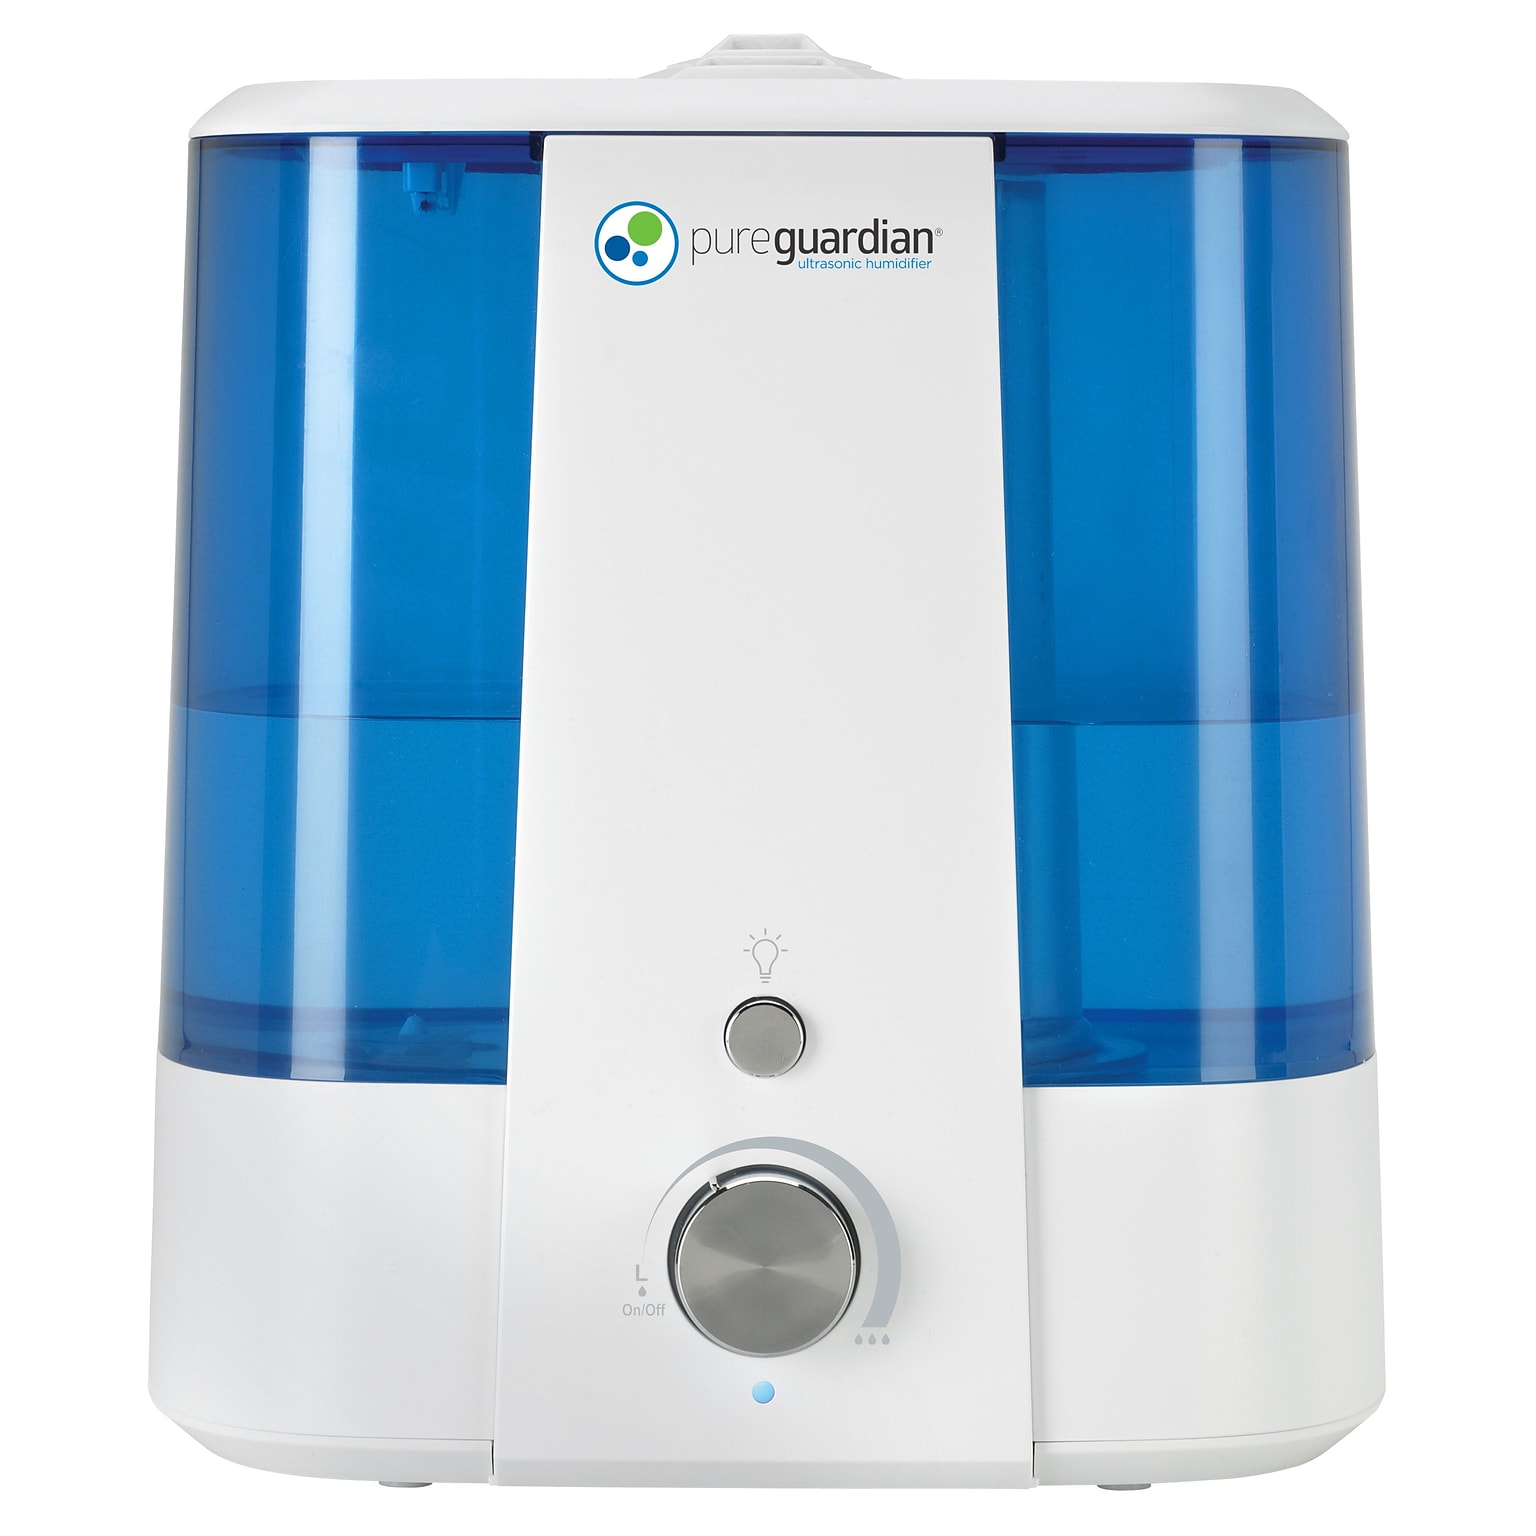 PureGuardian Ultrasonic Cool Mist Console Humidifier, 1.5-Gallon, White/Blue (H1175WCA)